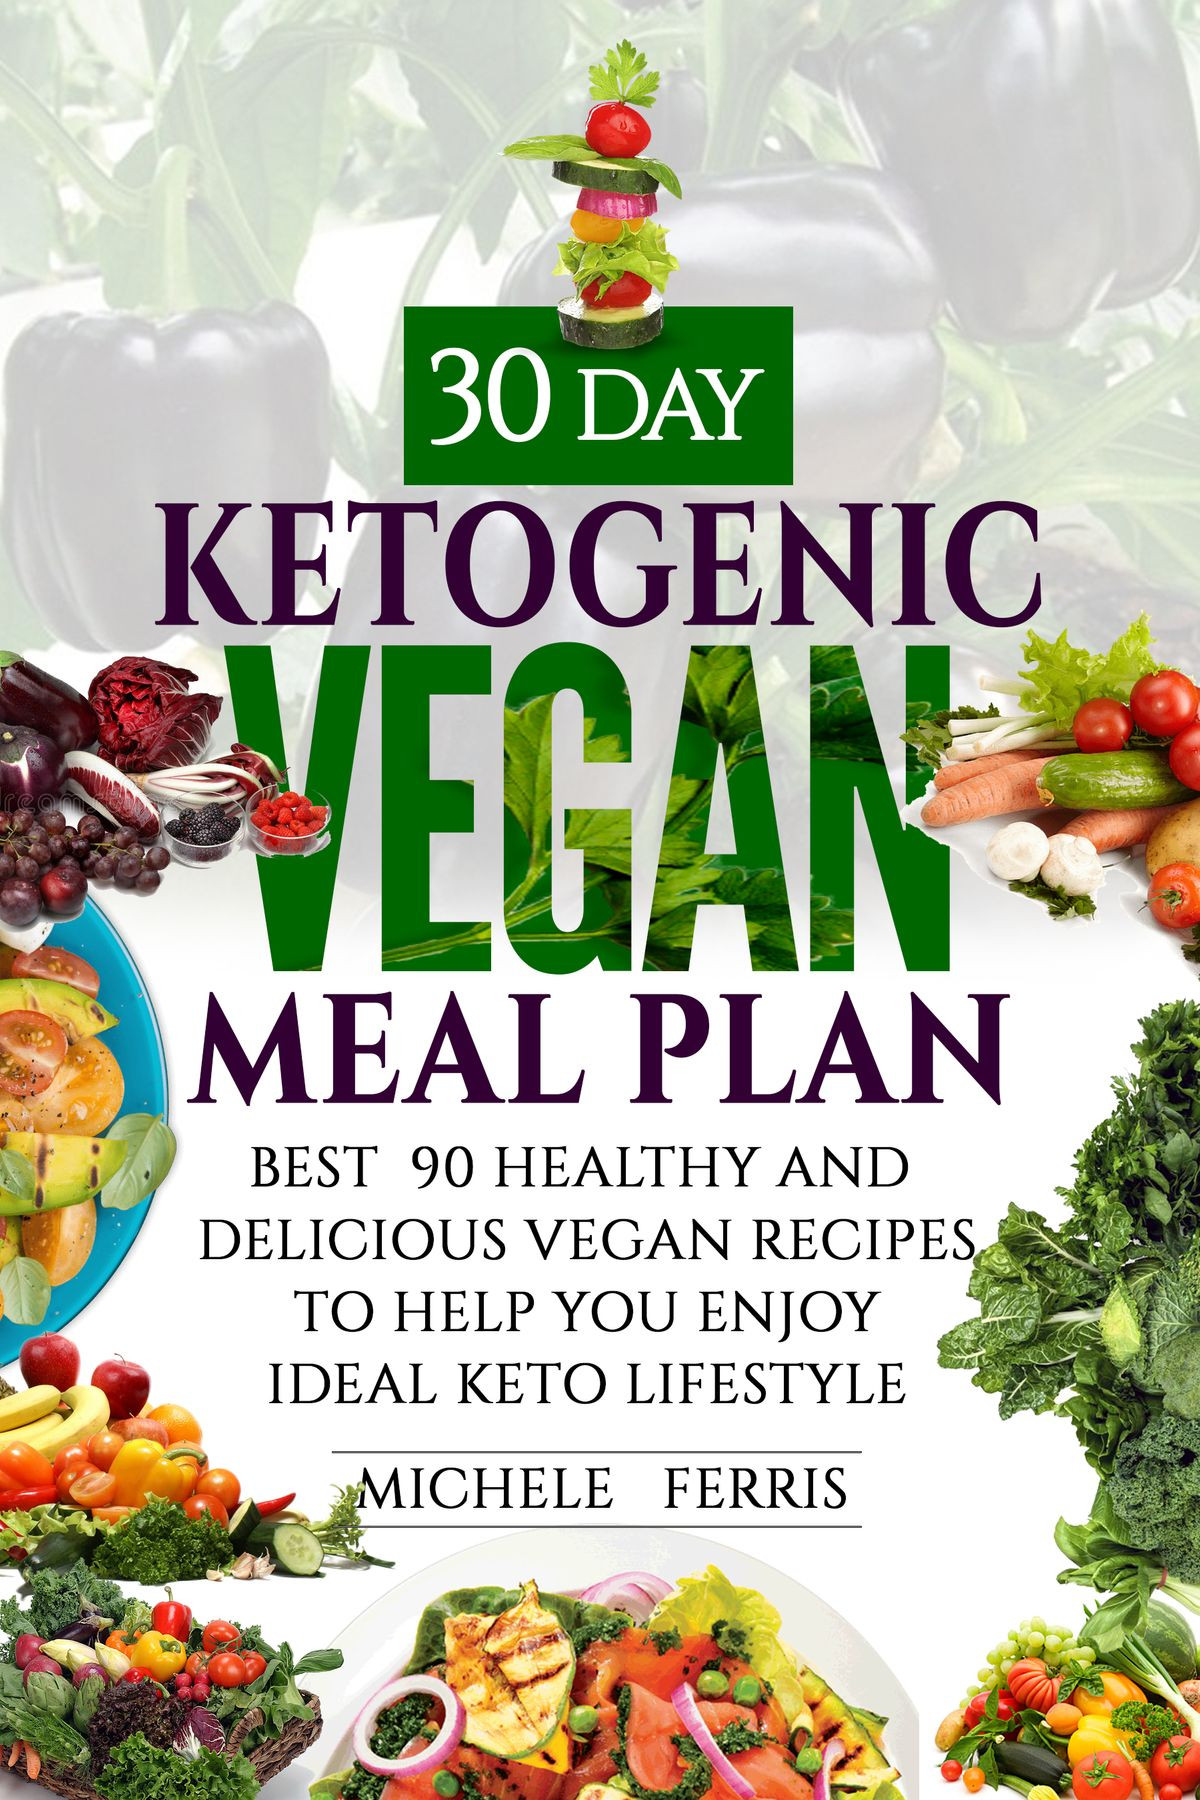 Zuckerfrei Vegan Plan
 The 30 Day Ketogenic Vegan Meal Plan Best 90 Healthy And